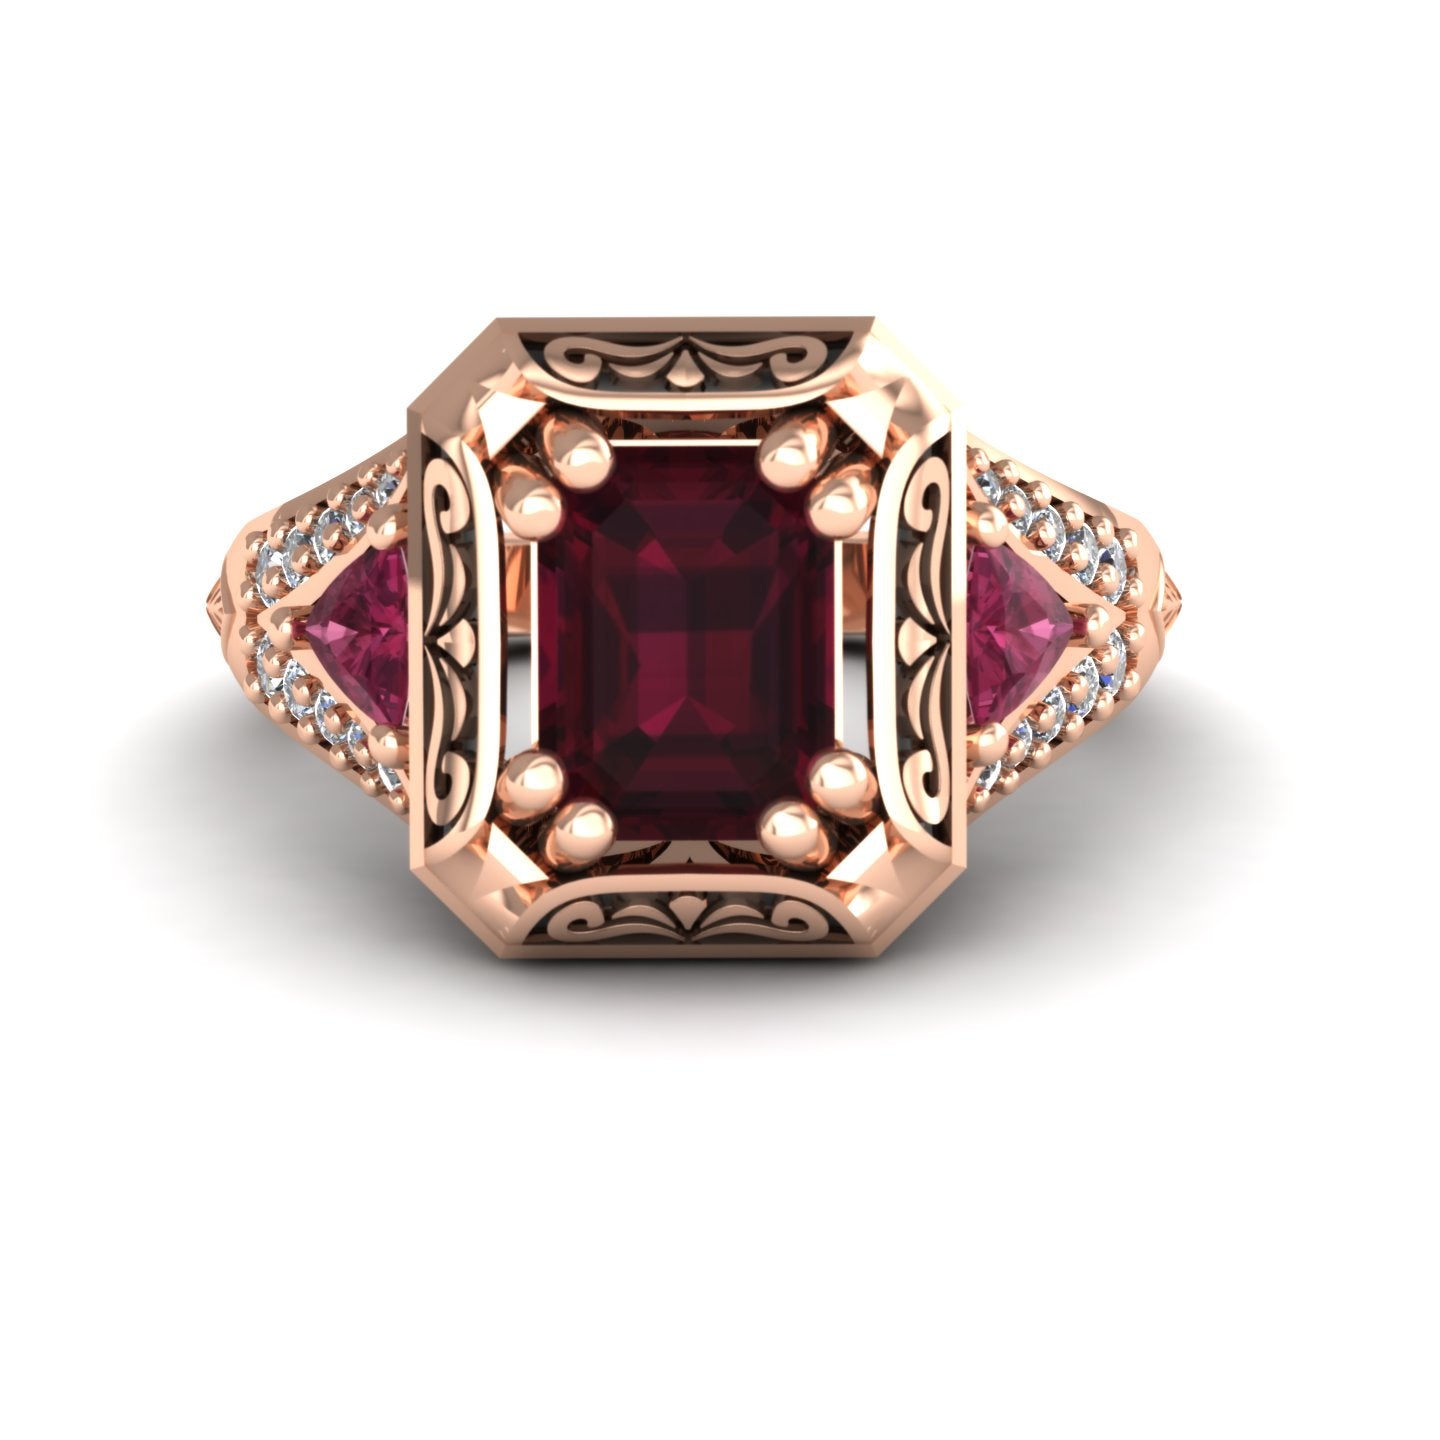 emerald cut rhodolite garnet trillion pink tourmaline and diamond split shank ring in 14k rose gold - Charles Babb Designs - top view